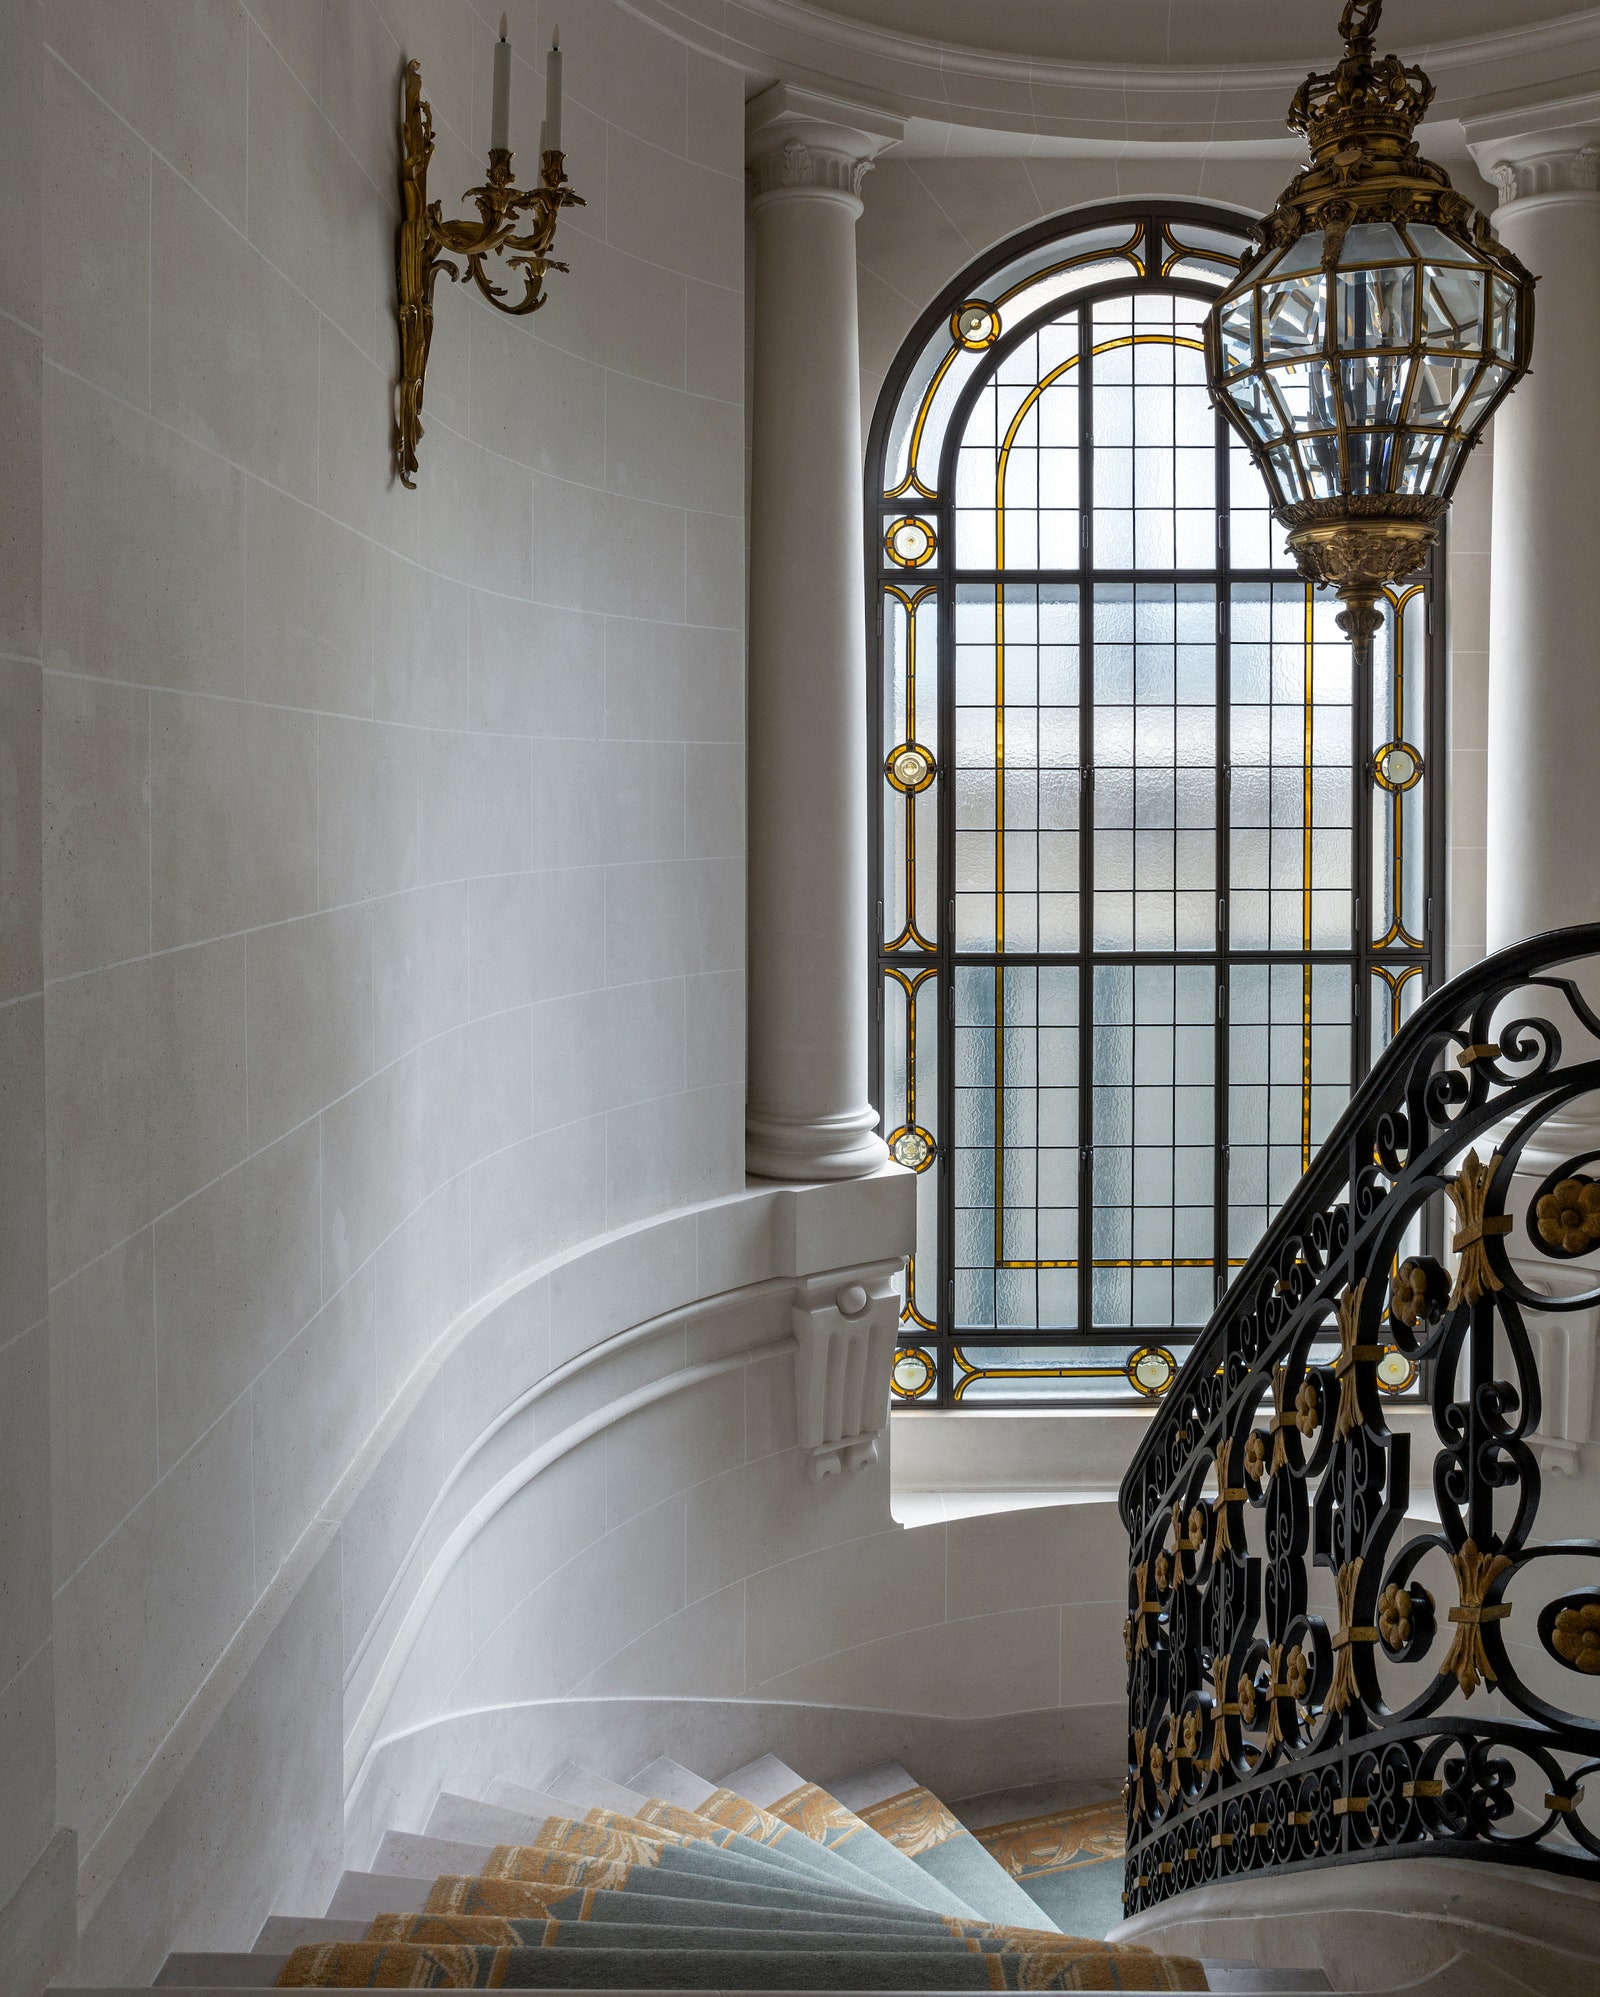 Отделкой стен на лестнице занималось Ateliers Duchemin они же сделали витражное окно.